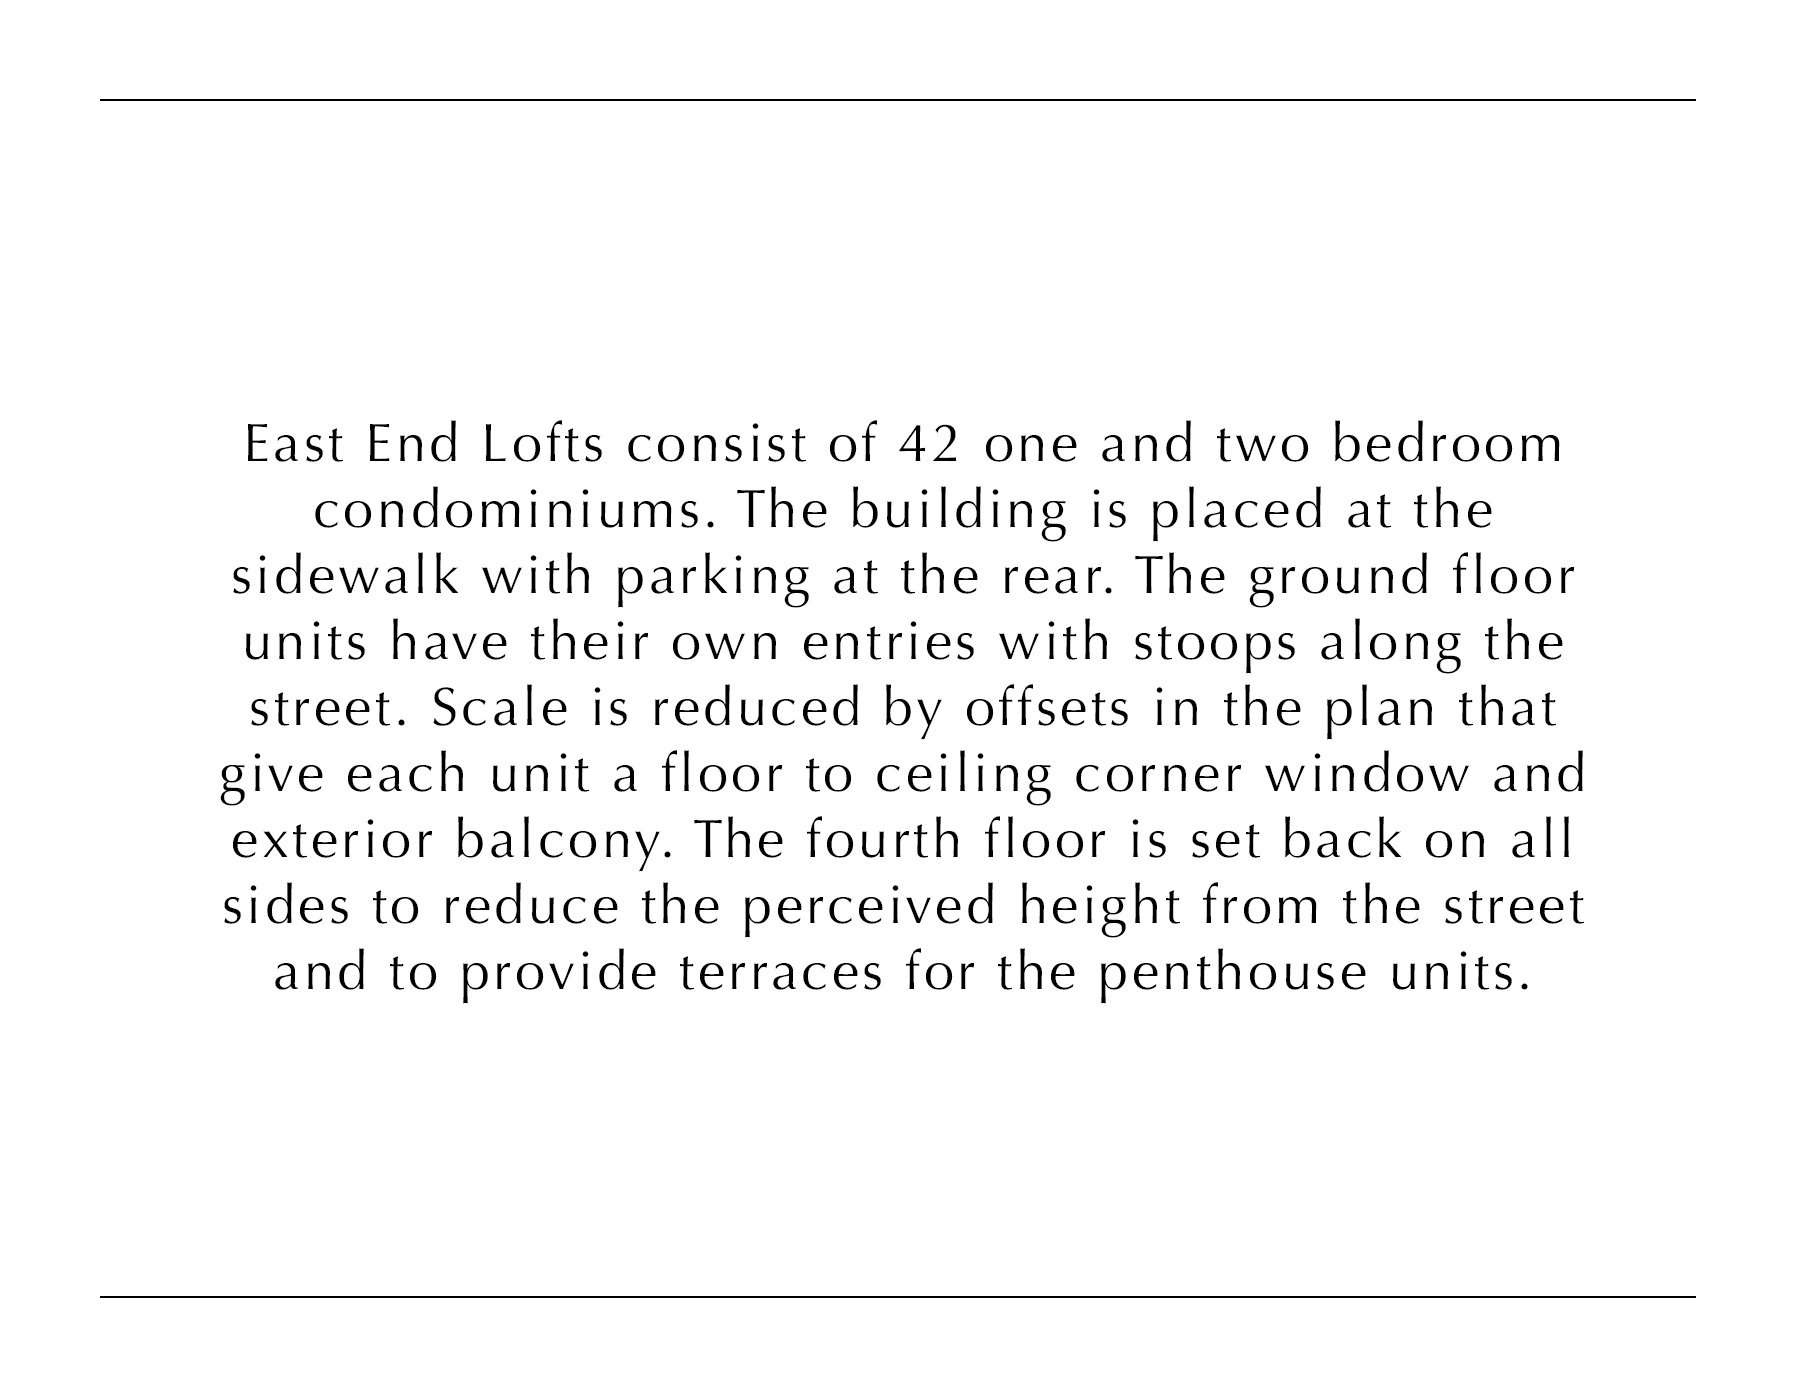 east-end-lofts-slide-text-1800-1400.jpg